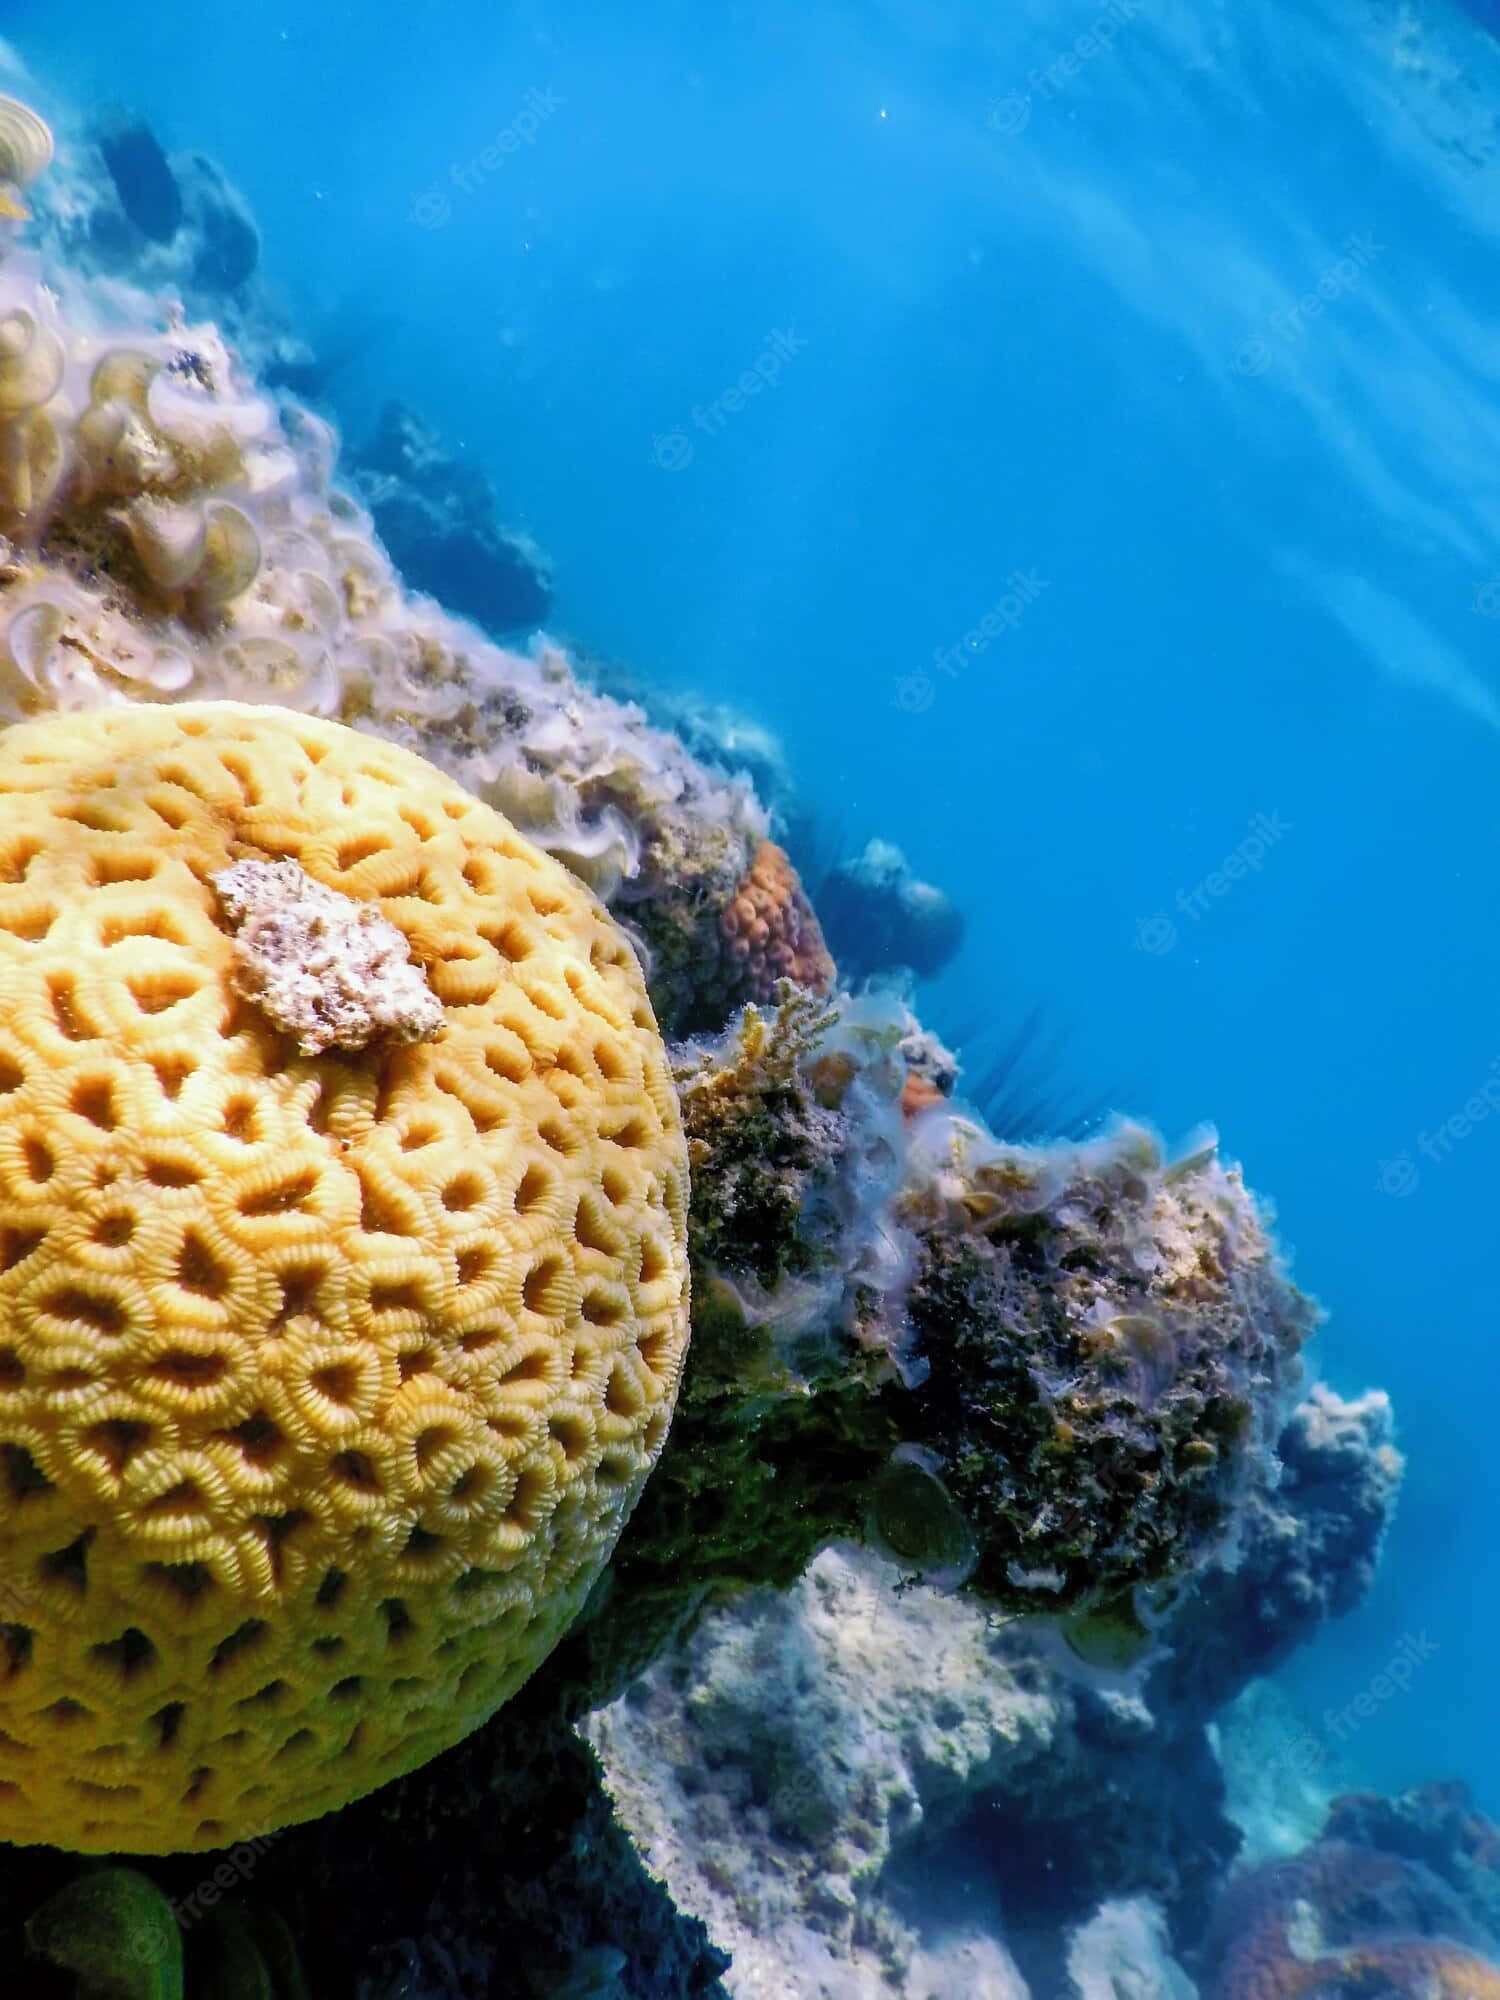 A Vibrant Undersea Scene Showing Spongebob Squarepants In His Signature Pineapple House Wallpaper